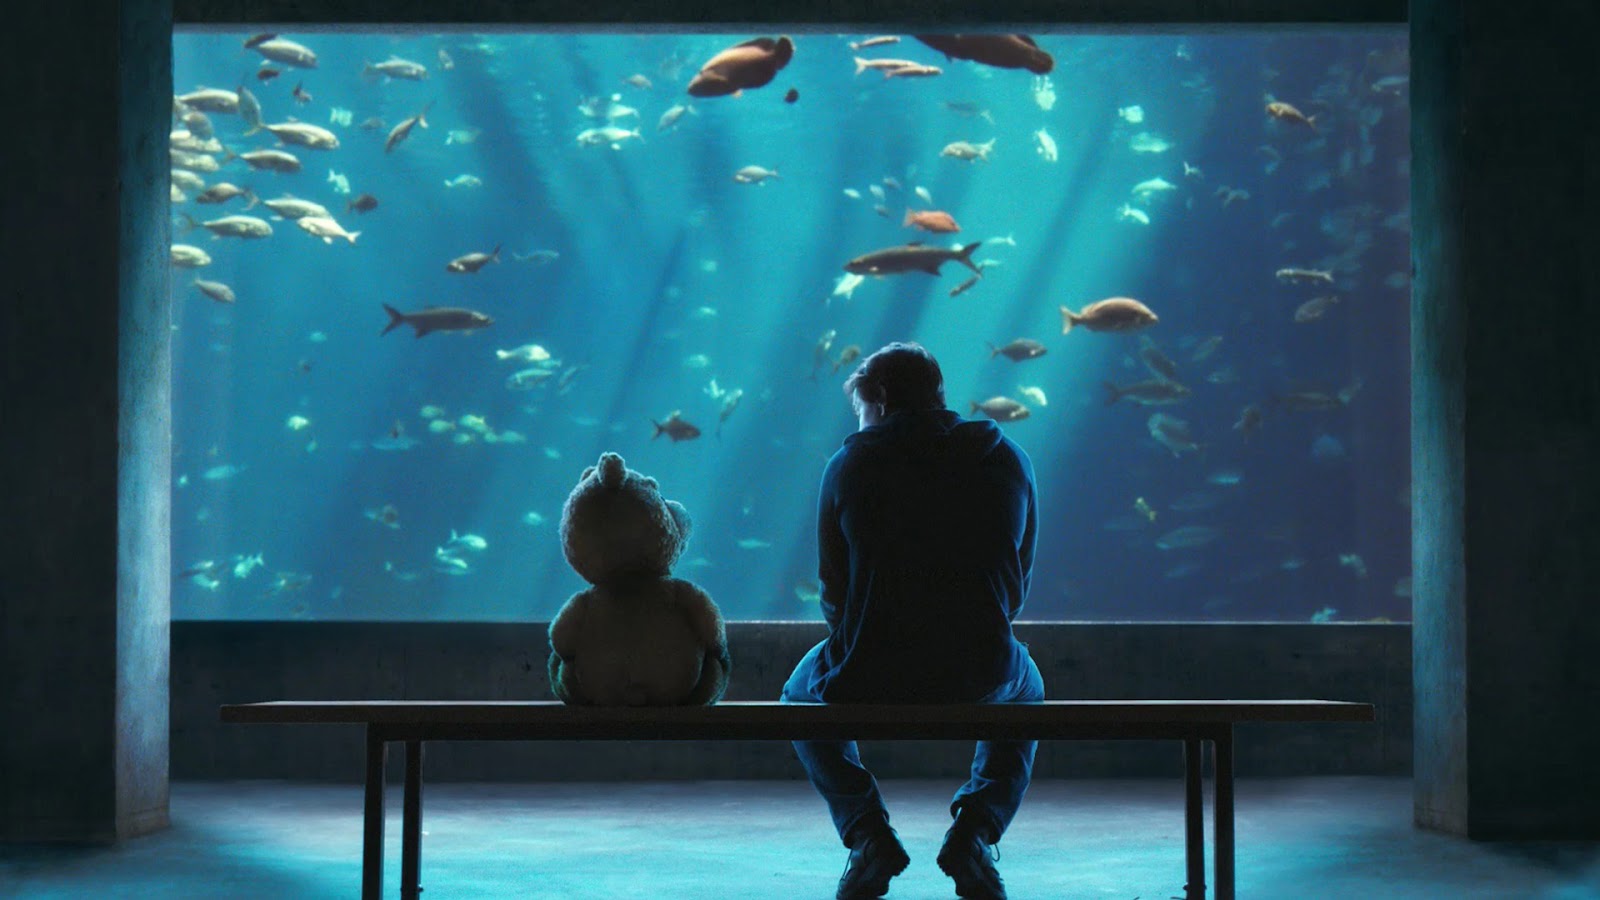 Ted+Movie+Ted+and+Johnny+Mark+Wahlberg+at+Aquarium1.jpg